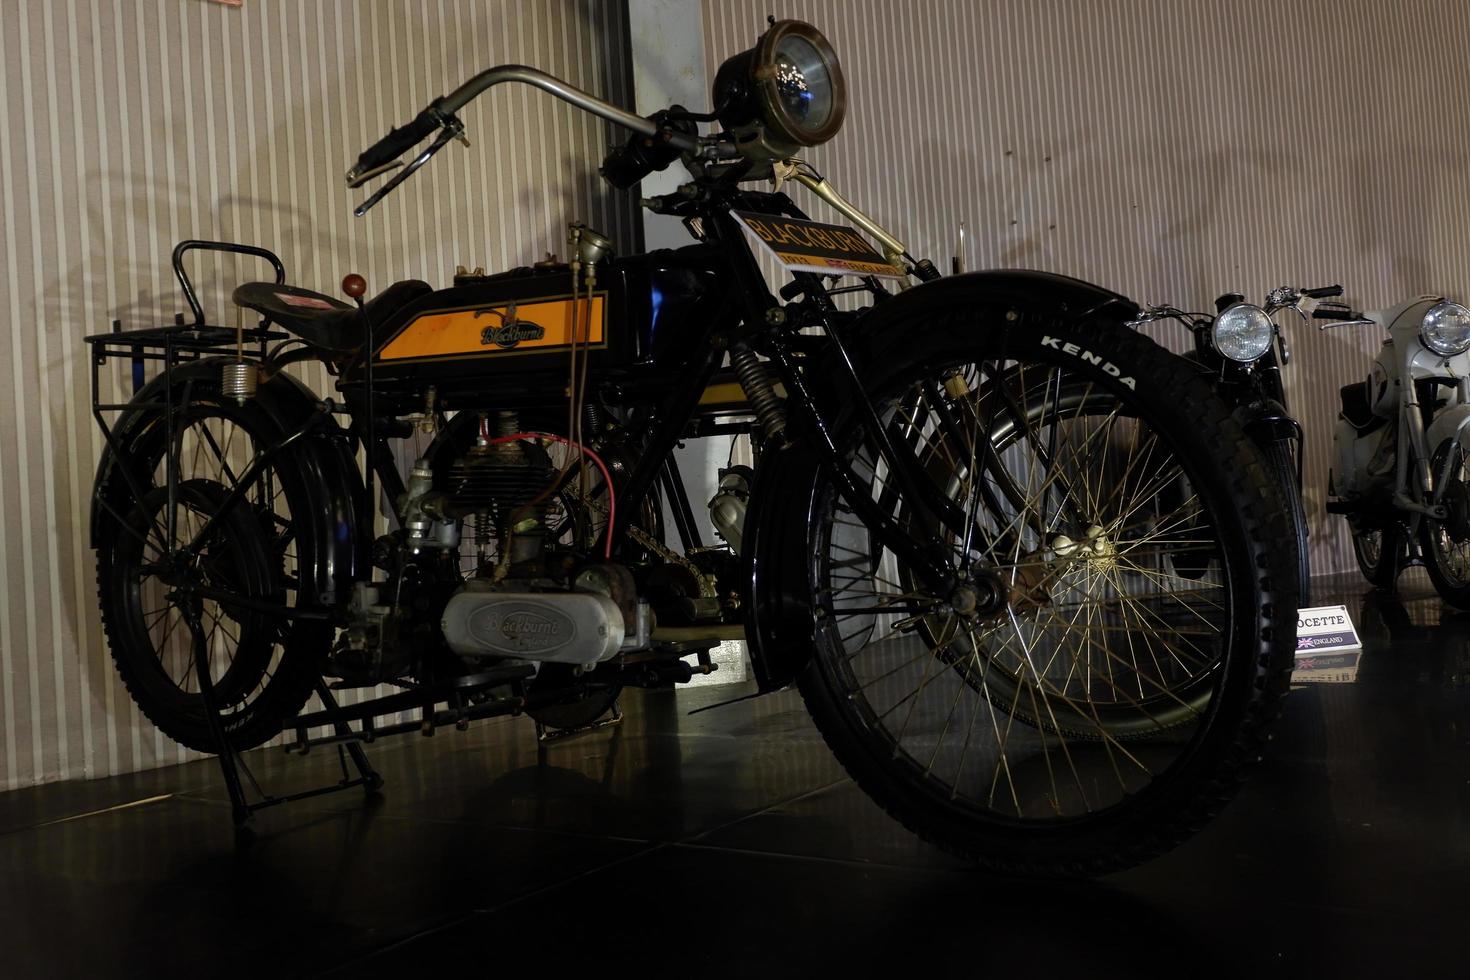 batu, java oriental, indonesia - 10 de agosto de 2022, motocicleta blackburn, motocicleta negra antigua en el museo angkut foto